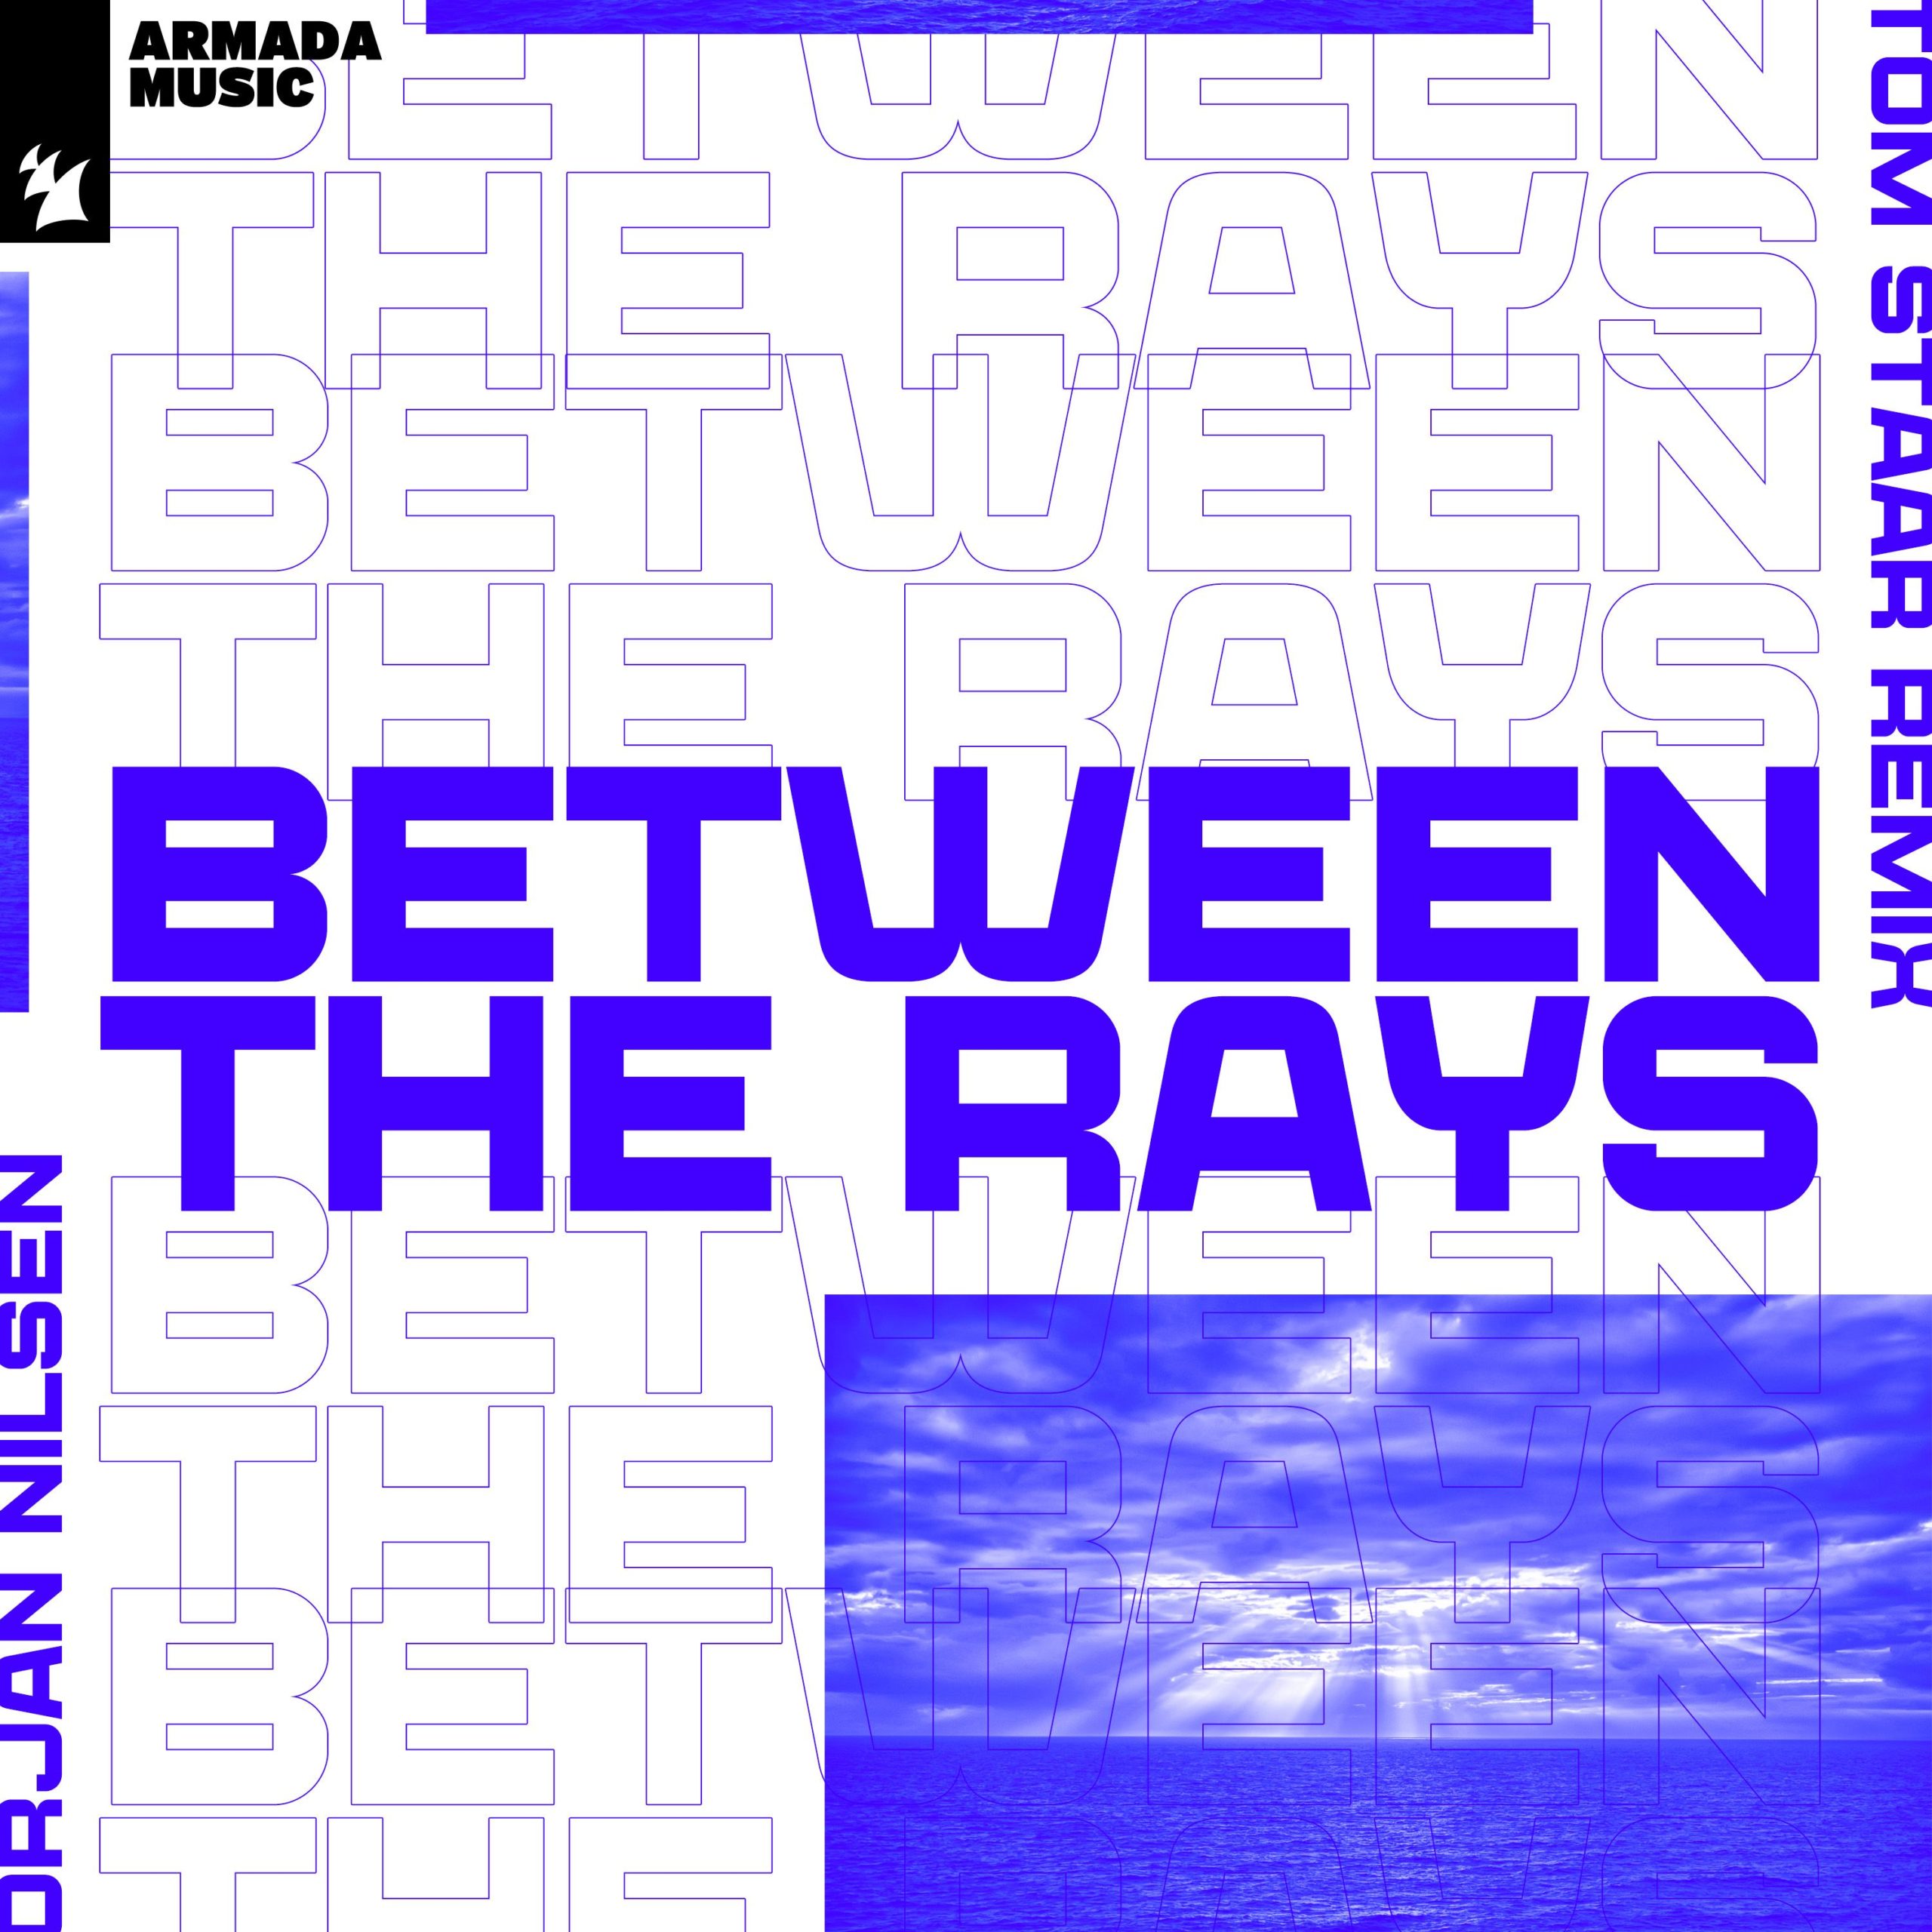 Orjan Nilsen presents Between The Rays (Tom Staar Remix) on Armada Music